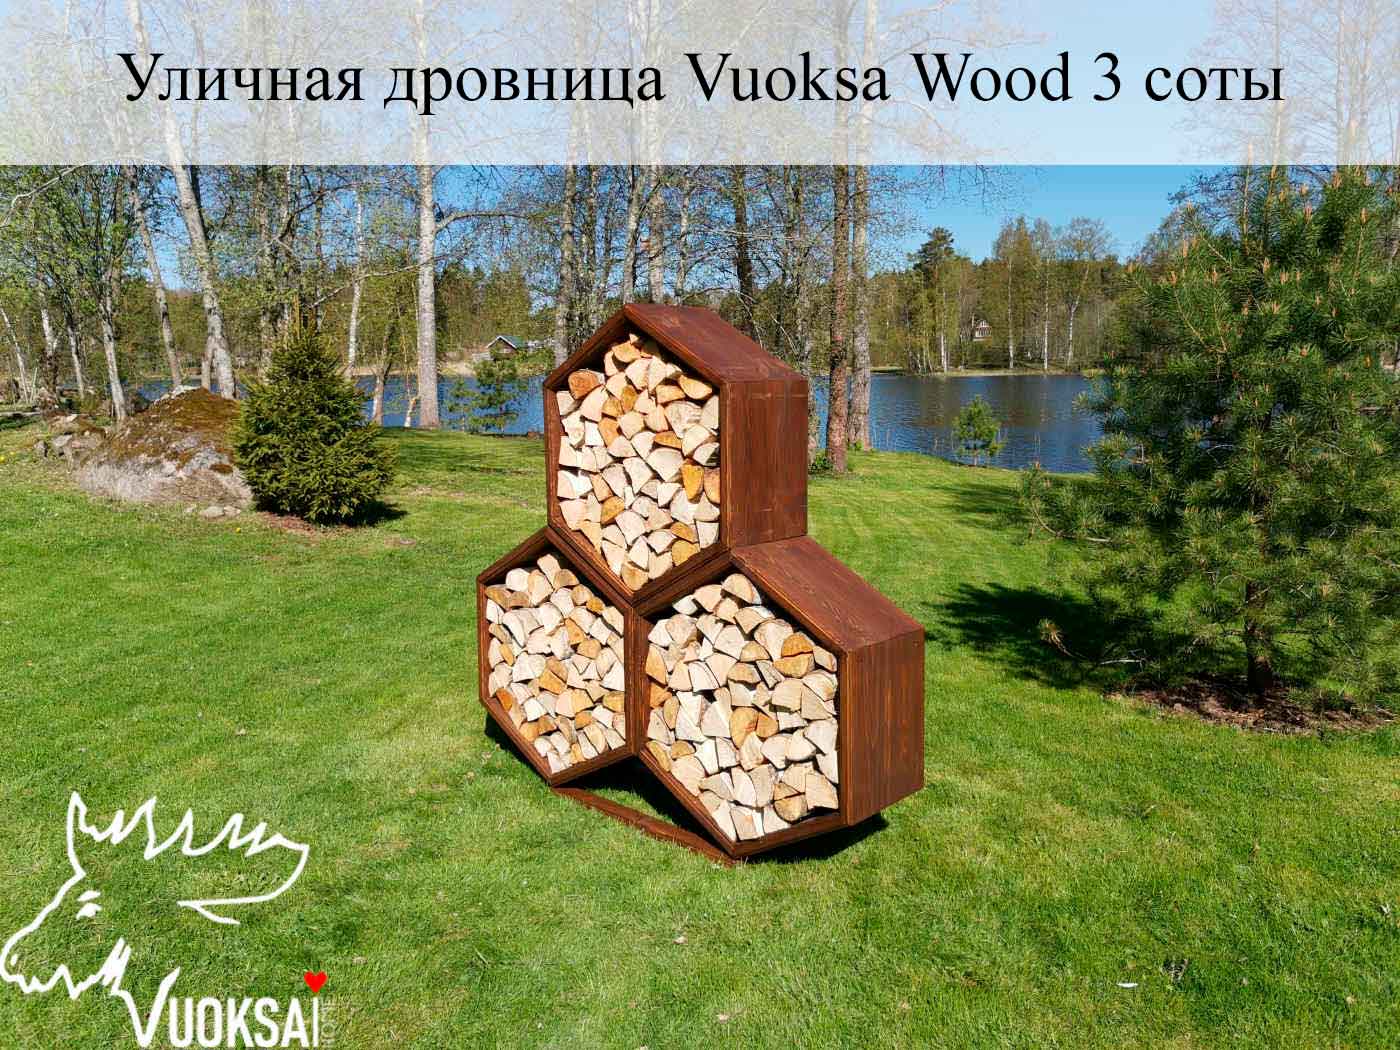 Уличная дровница Vuoksa-Wood